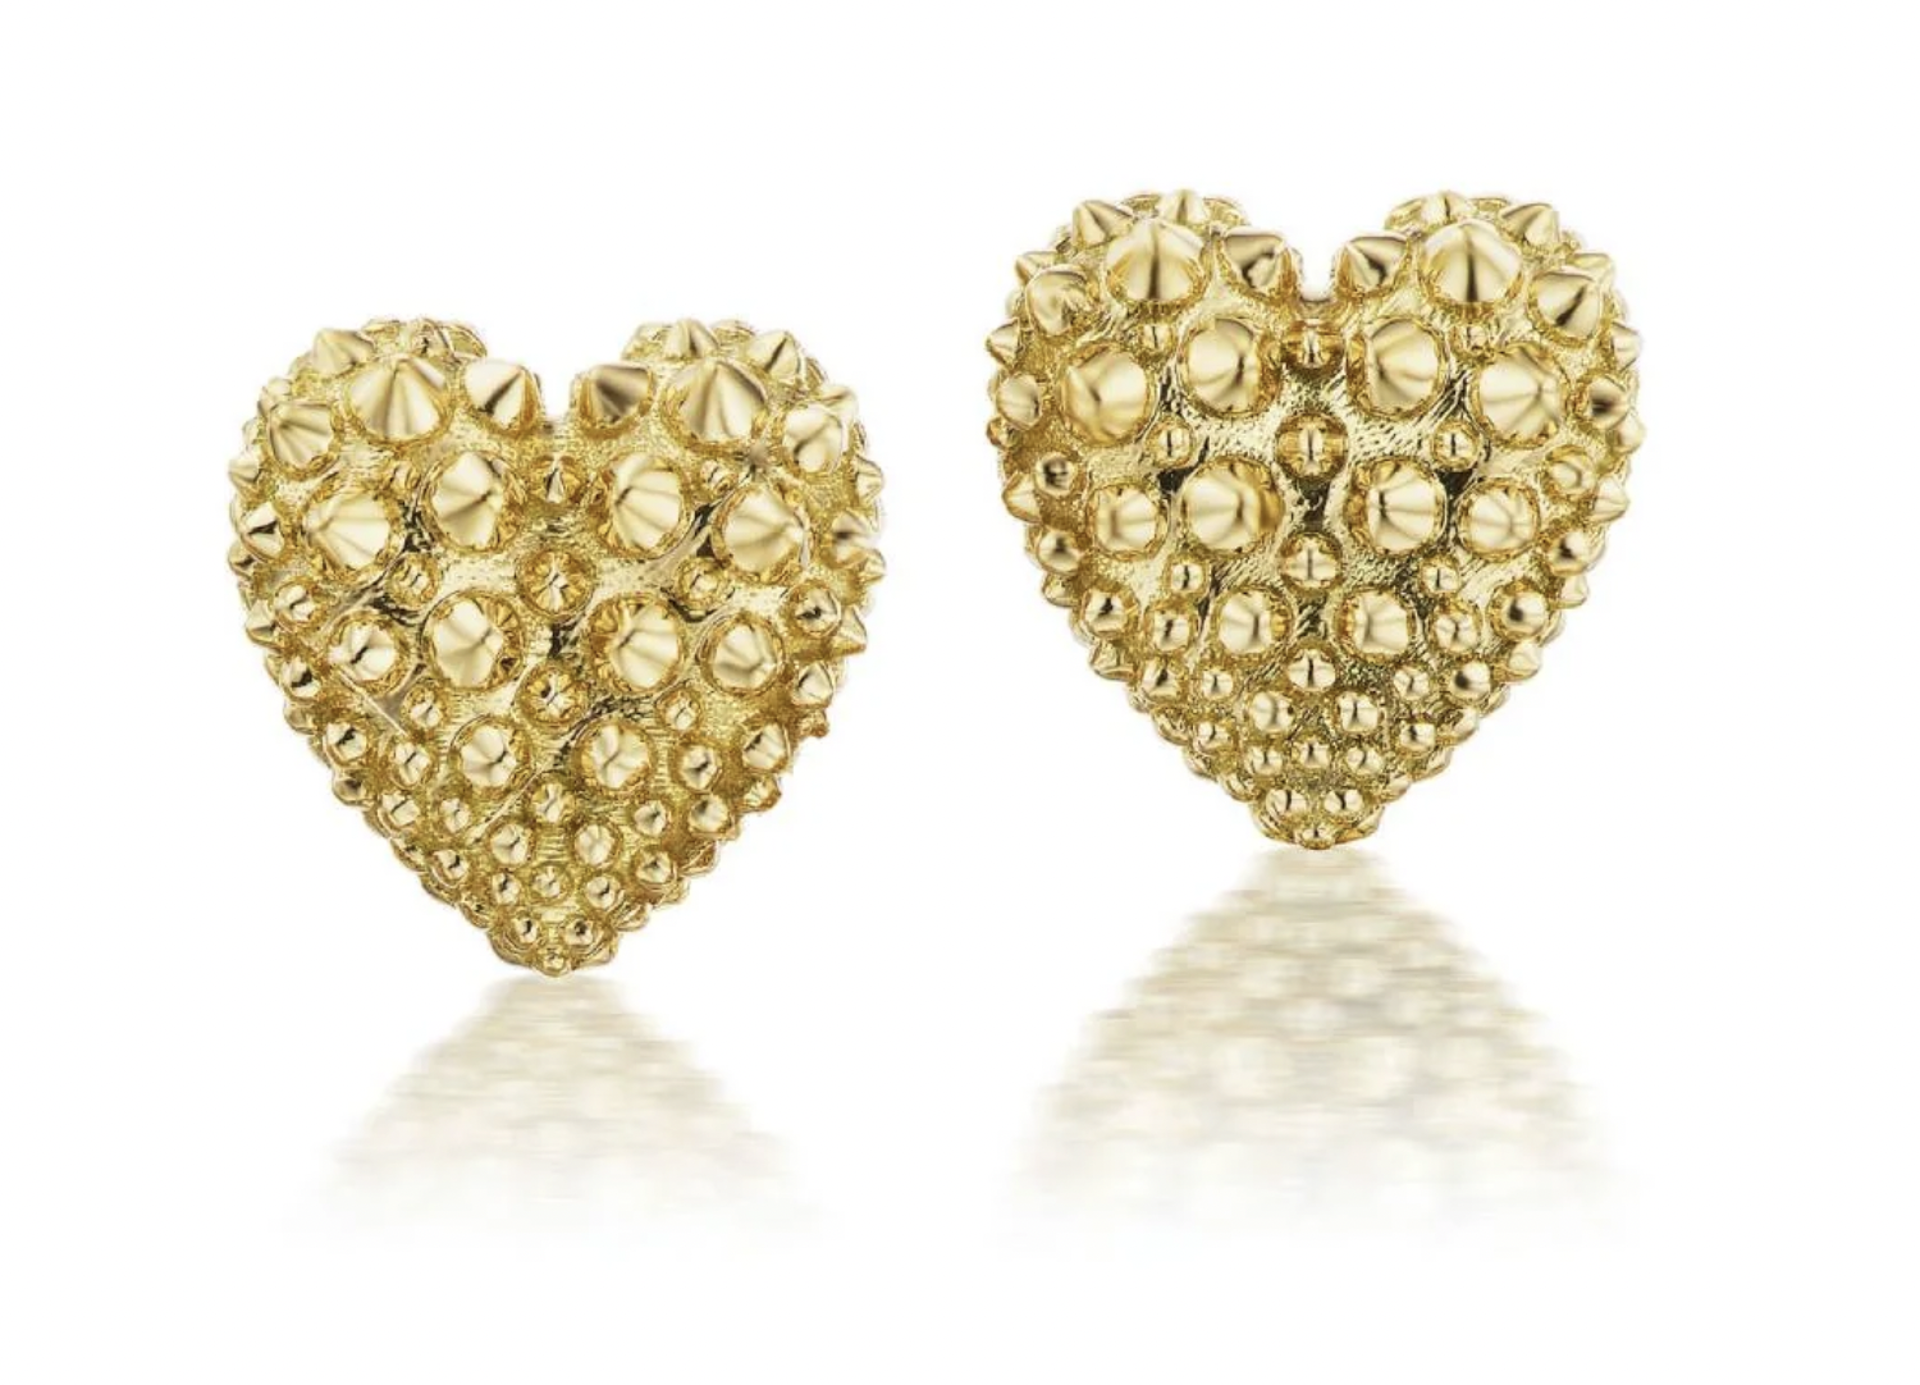 Pierce Your Heart Yellow Gold Spikes by Ana Katarina